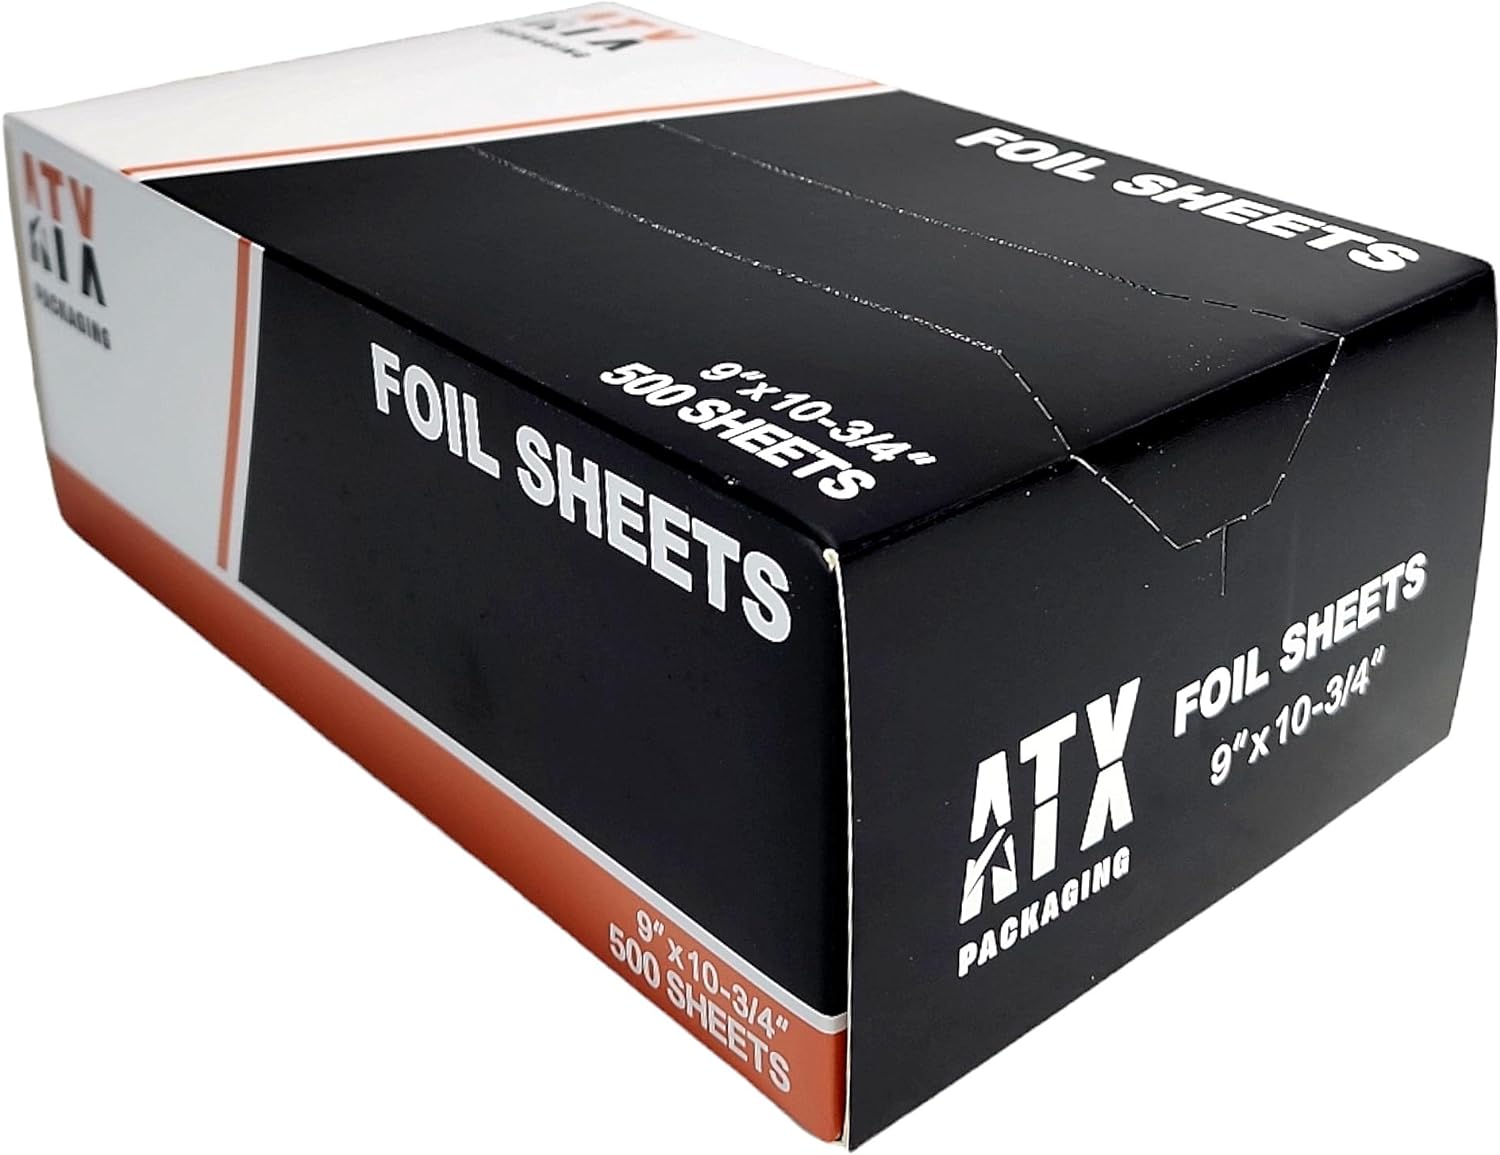 Durable 12 x 10.75 Pop-Up Foil Sheets 6 x 500/CS –